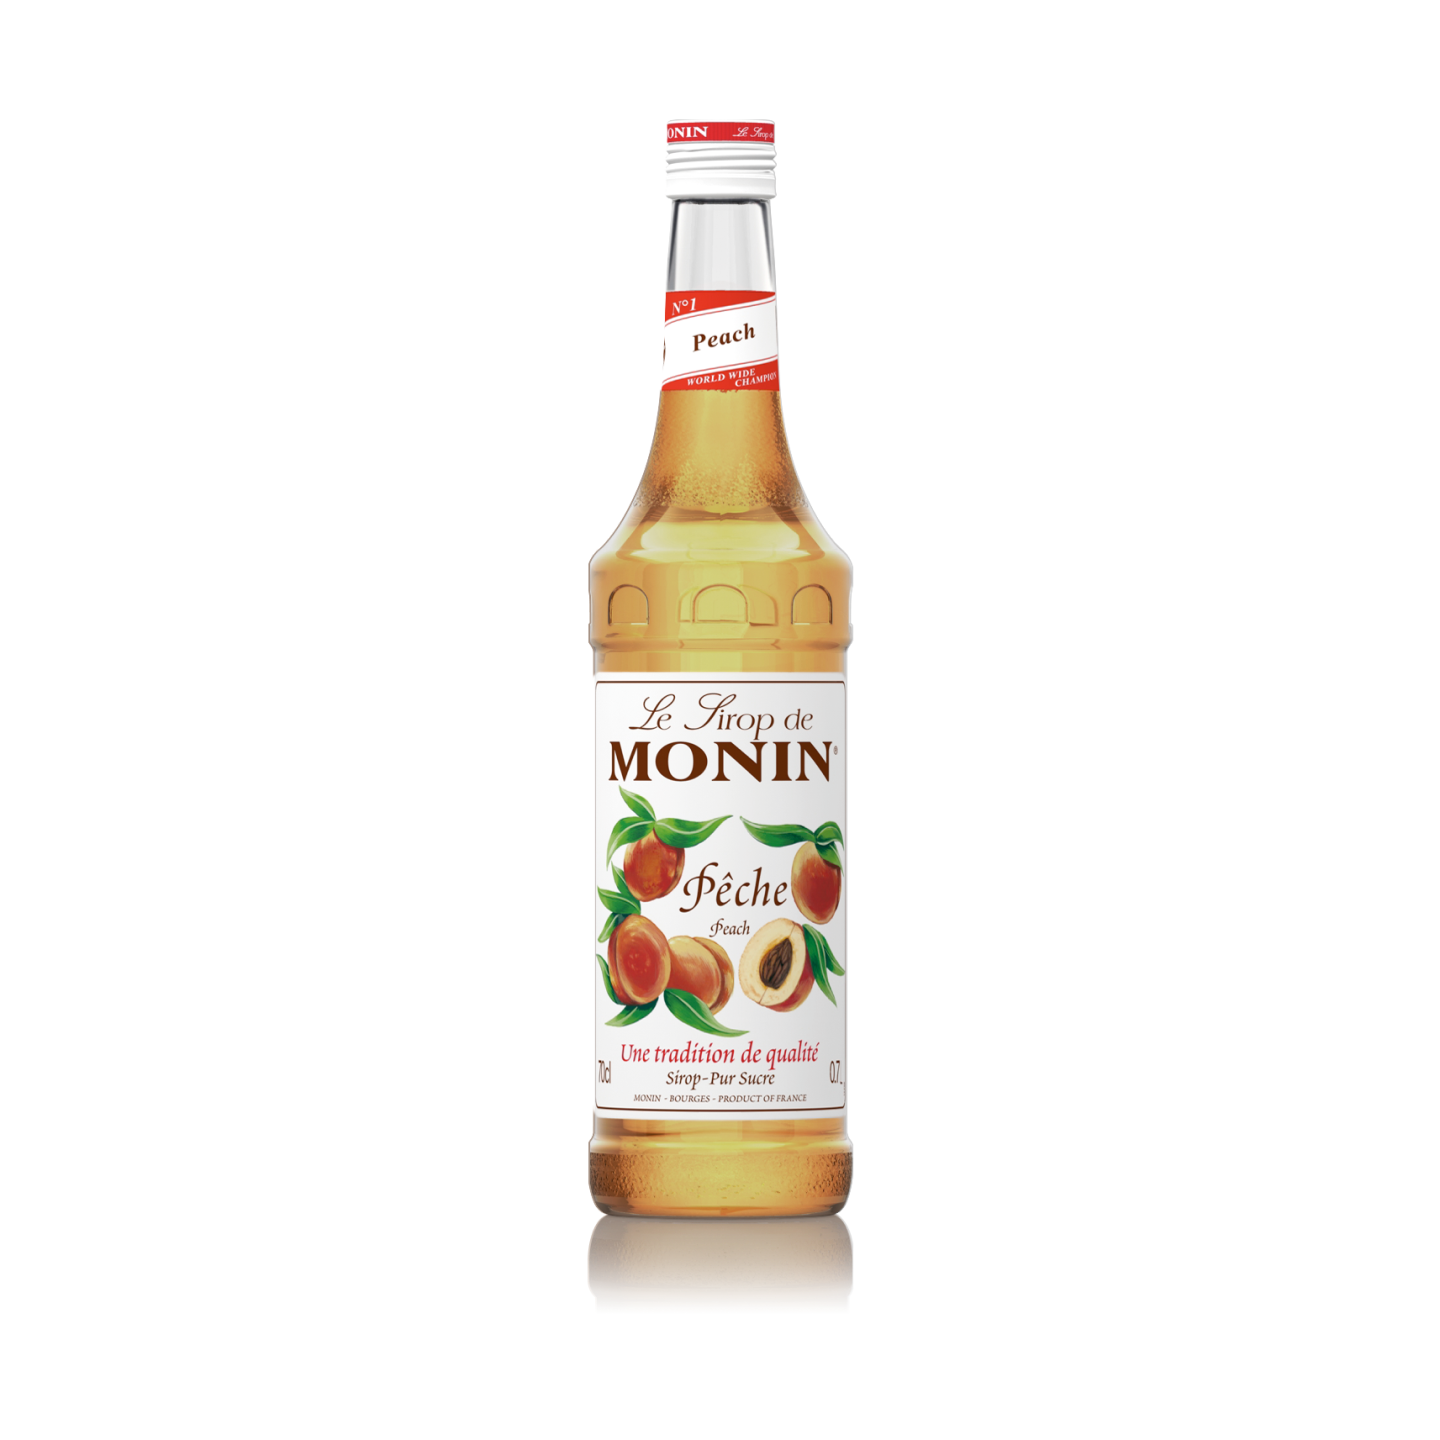 Monin Peach Syrup - Monin Đào